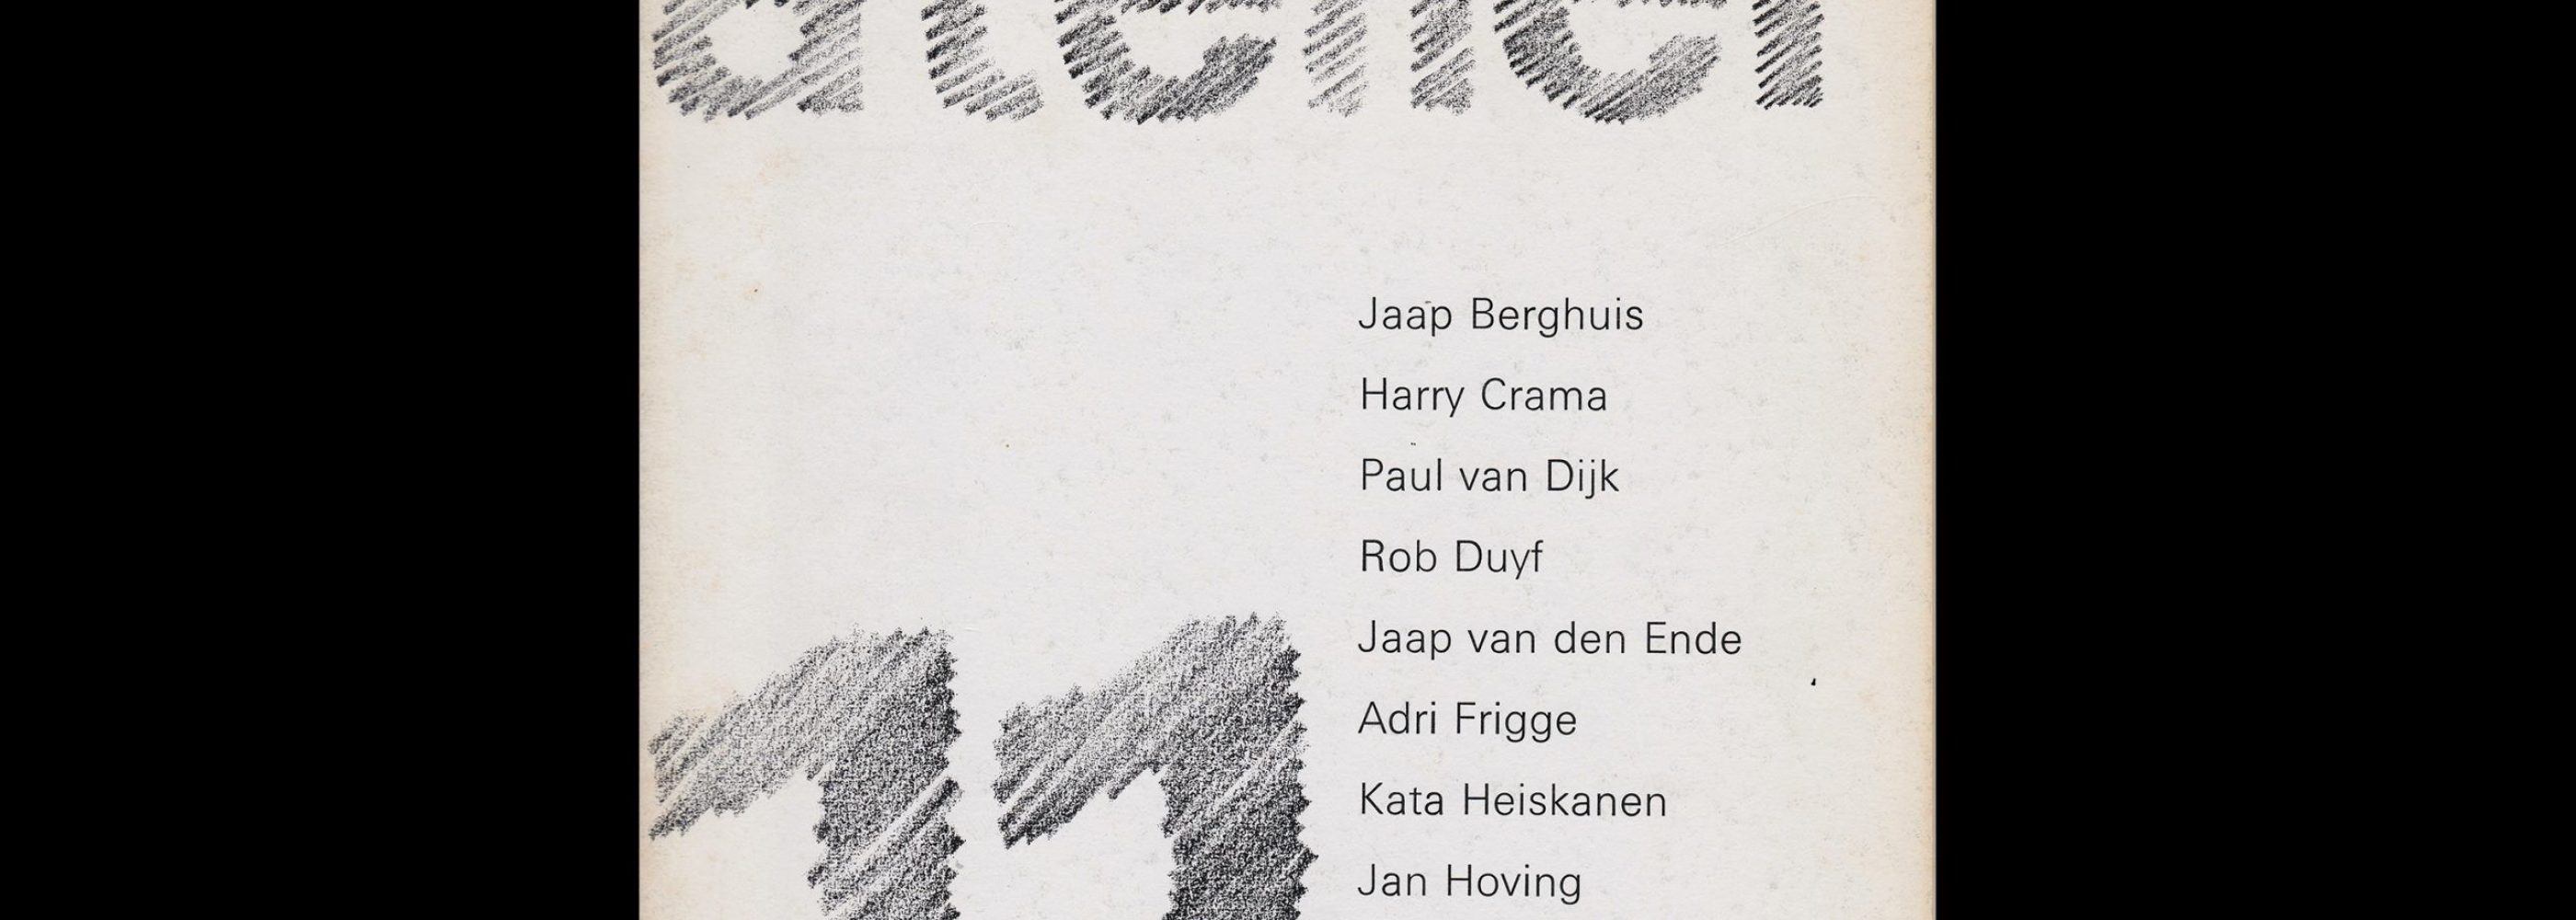 Atelier 11, Stedelijk Museum, Amsterdam, 1973 designed by Wim Crouwel and Daphne Duijvelshoff (Total Design)